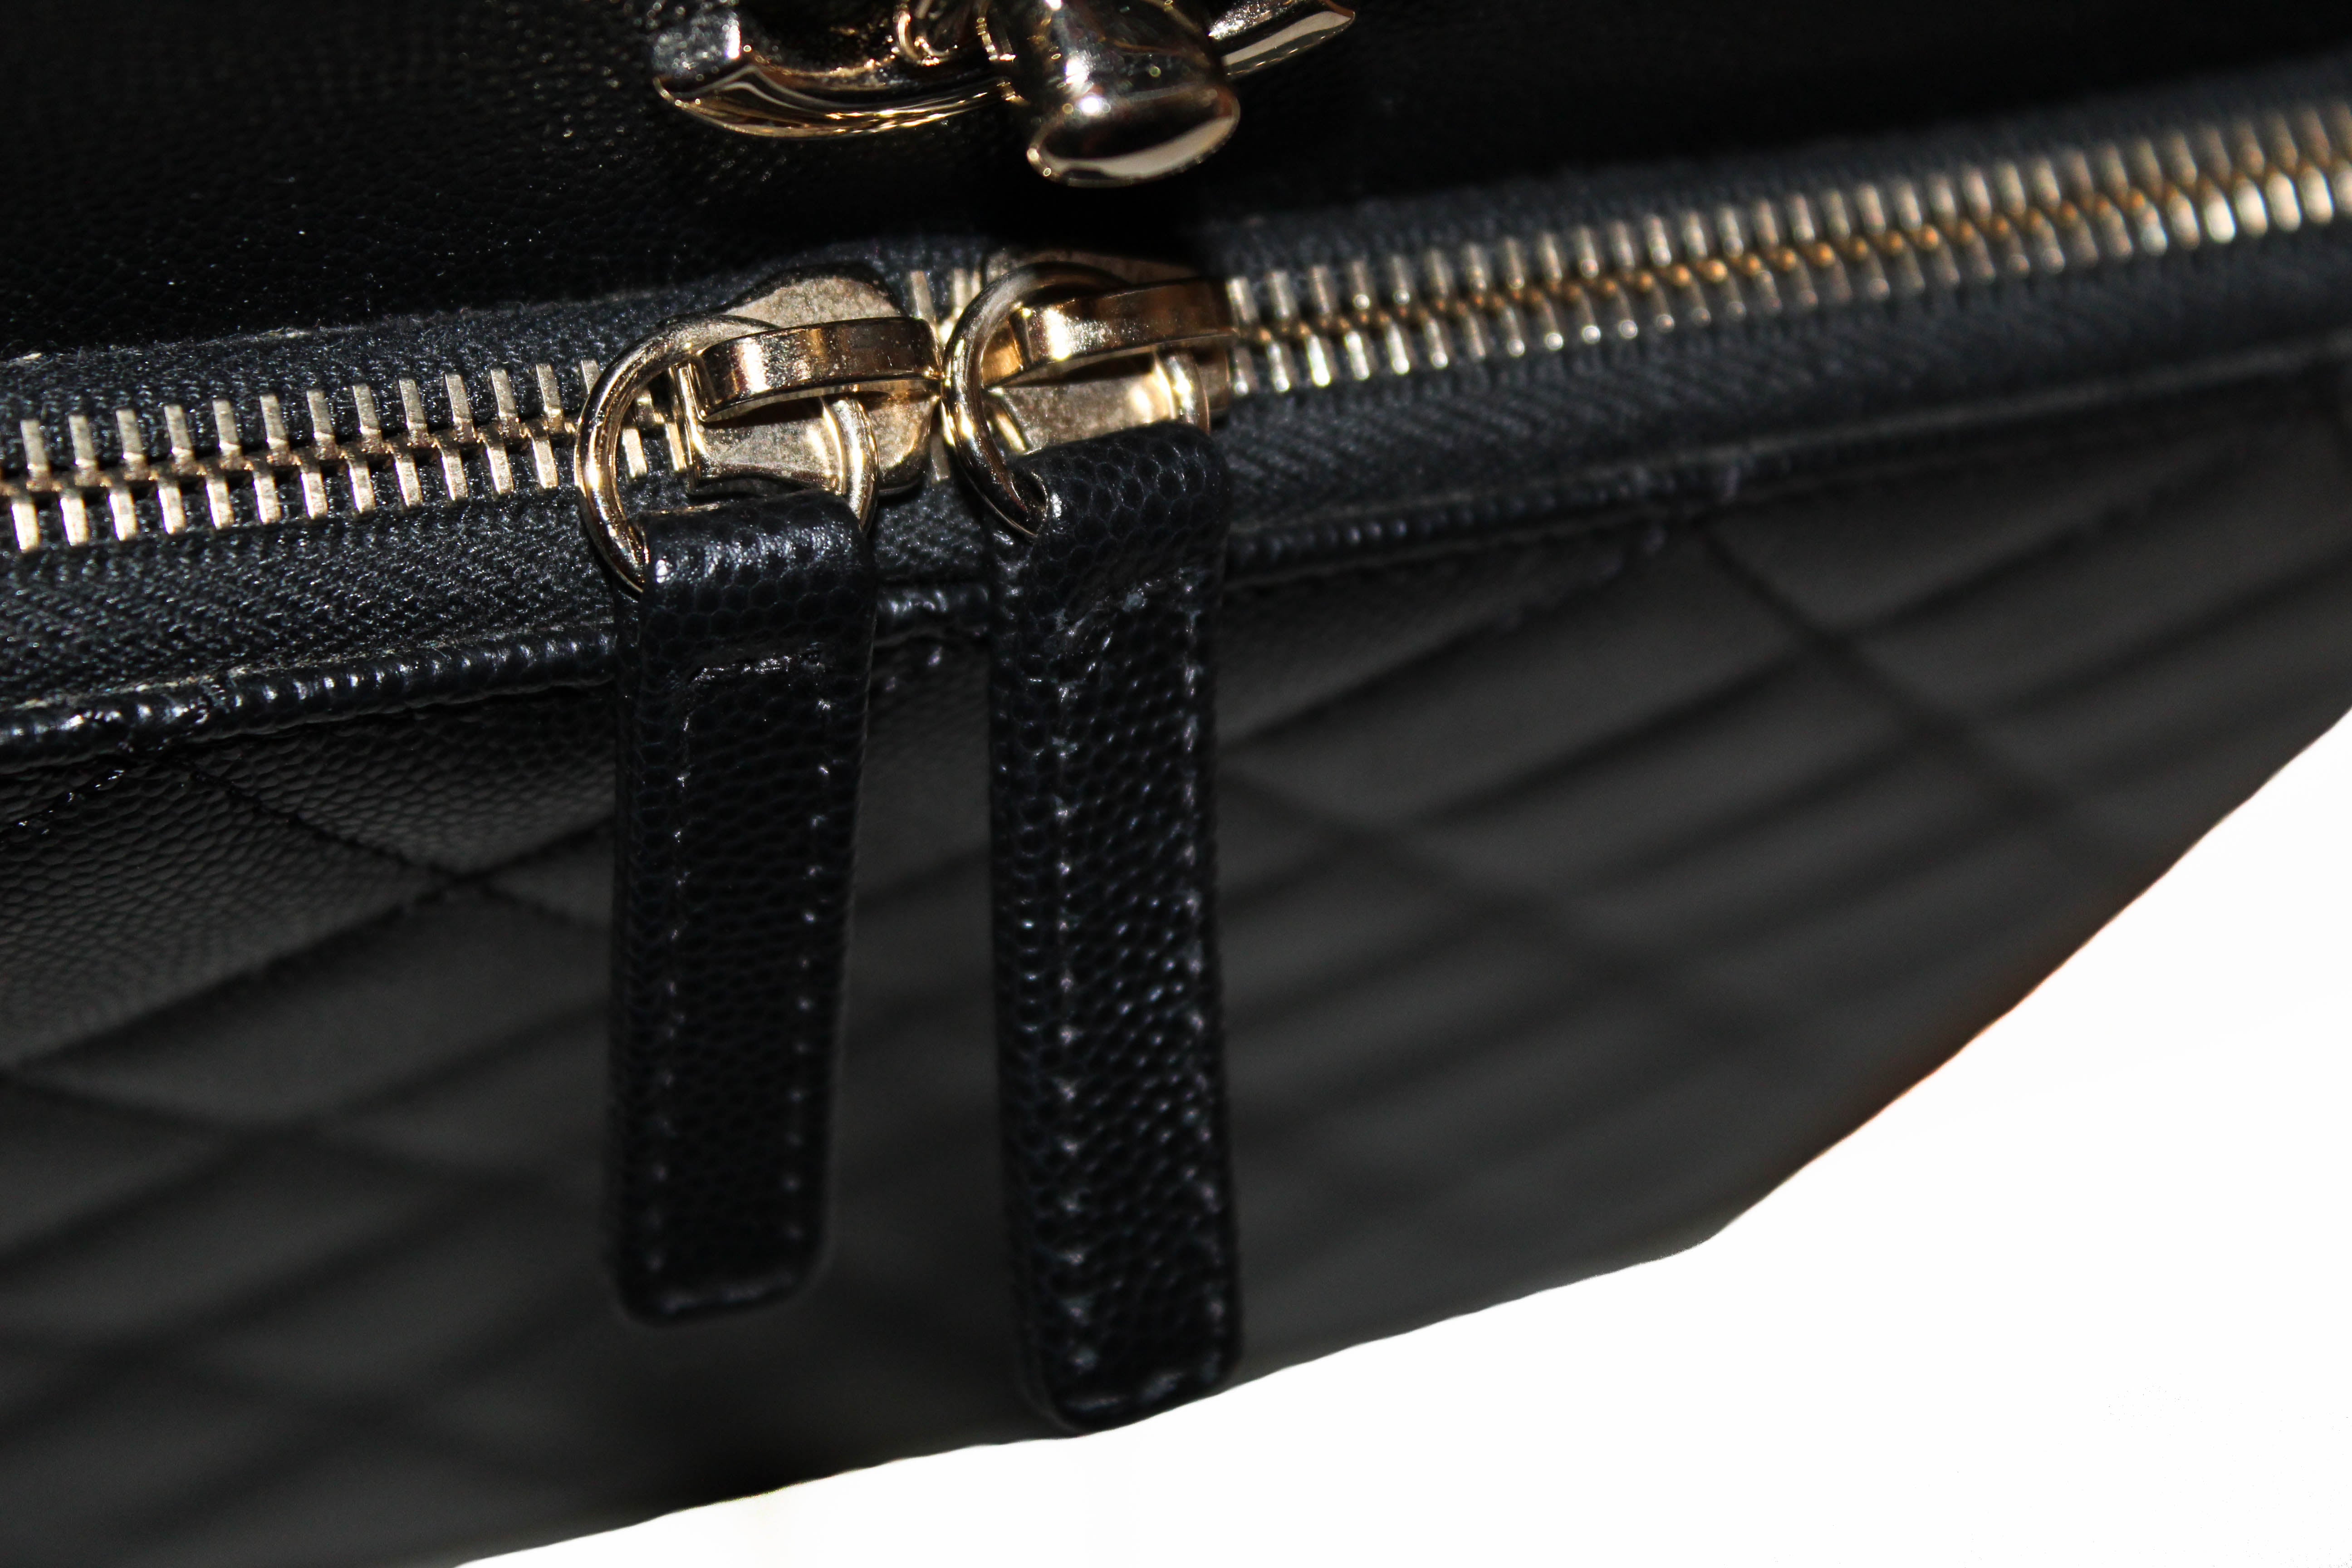 Authentic Chanel Black Caviar Leather Large Tote Shoulder Bag